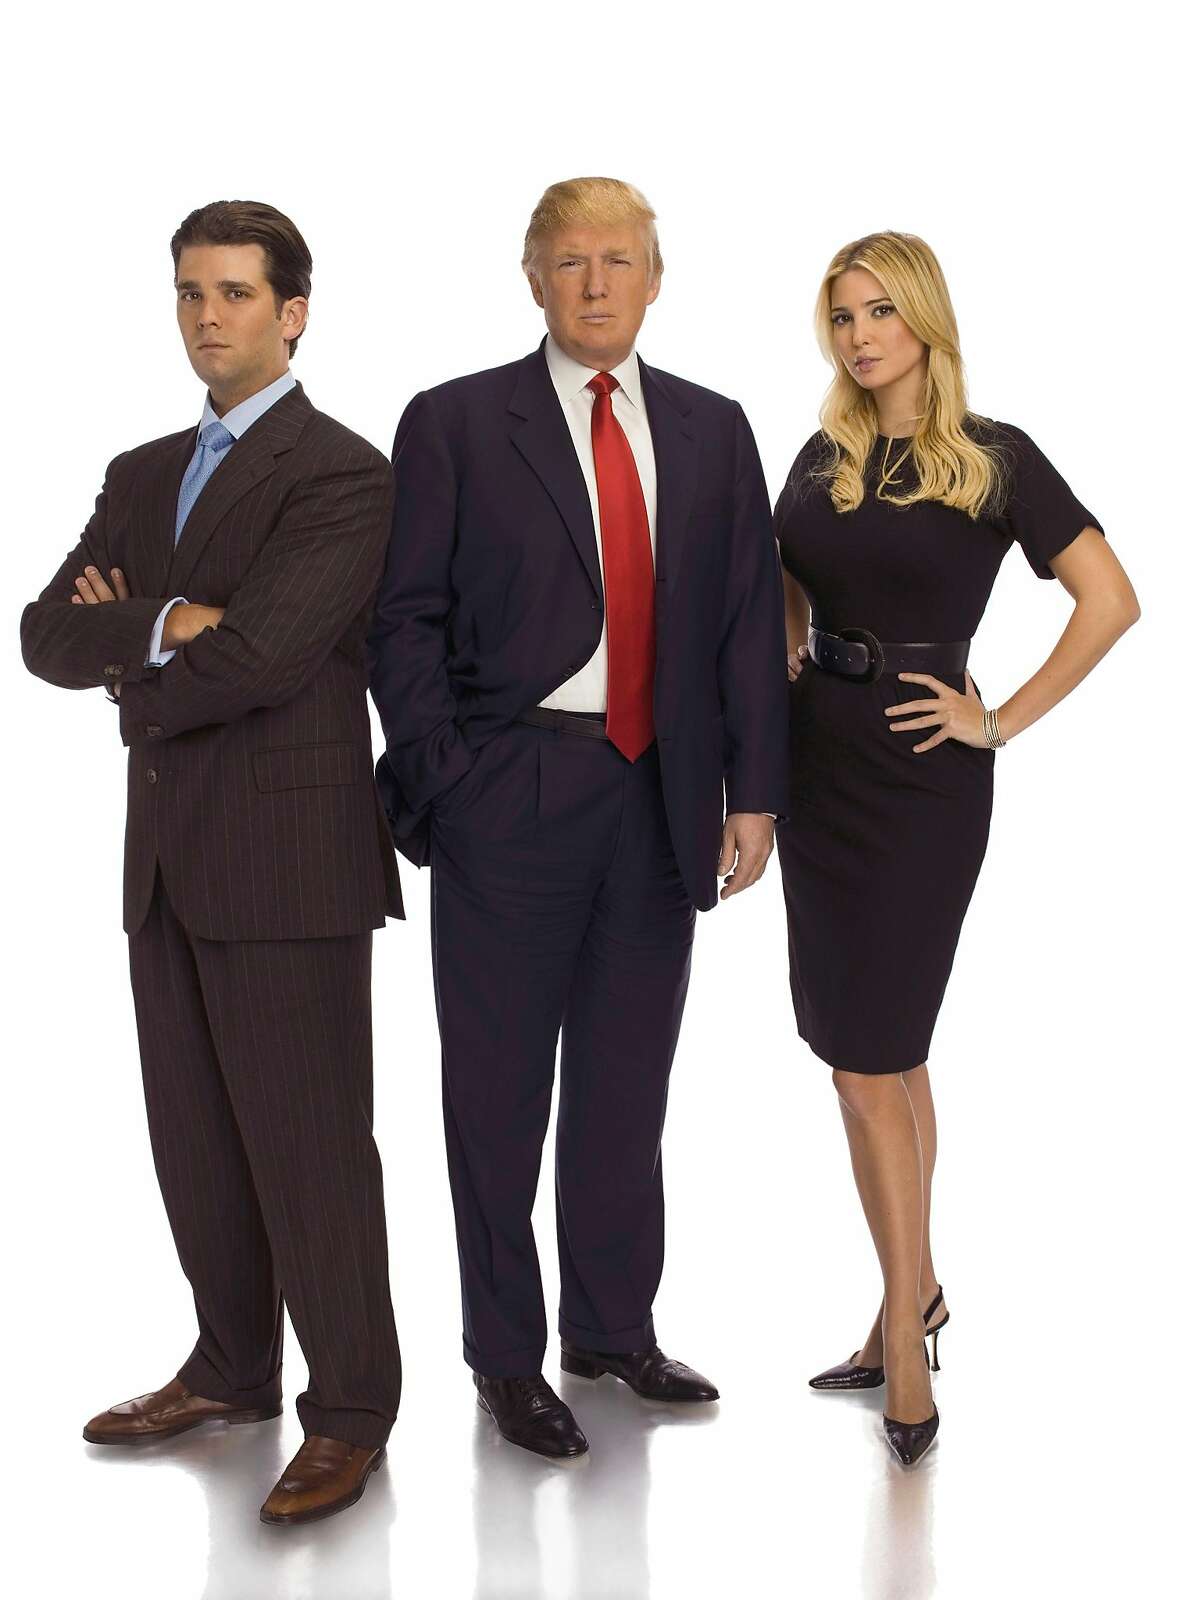 THE APPRENTICE -- Pictured: (l-r) Donald Trump, Jr., Donald Trump, Ivanka Trump -- NBC Photo: Virginia Sherwood